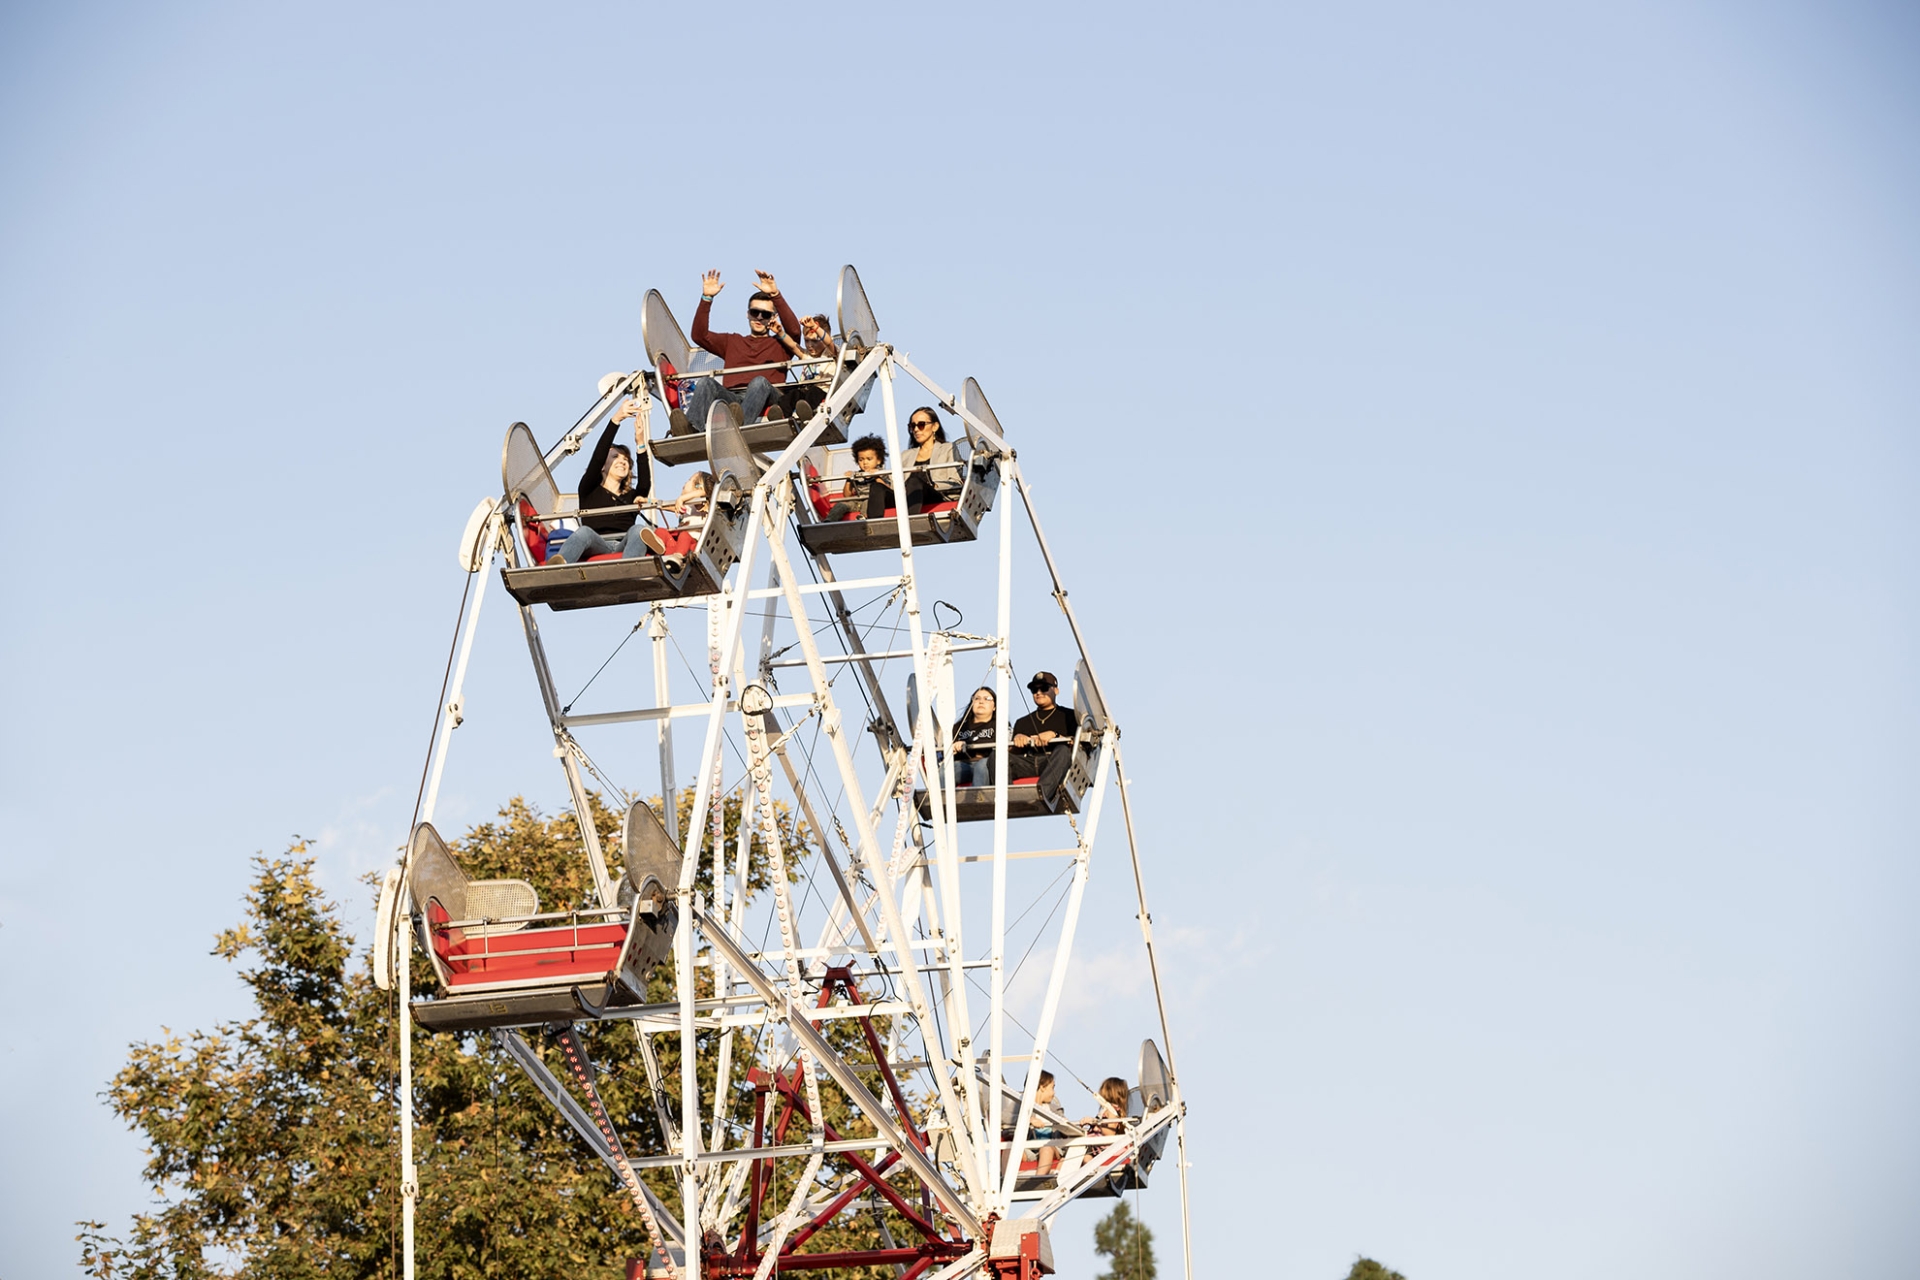 Guests enjoying the Ferris wheel